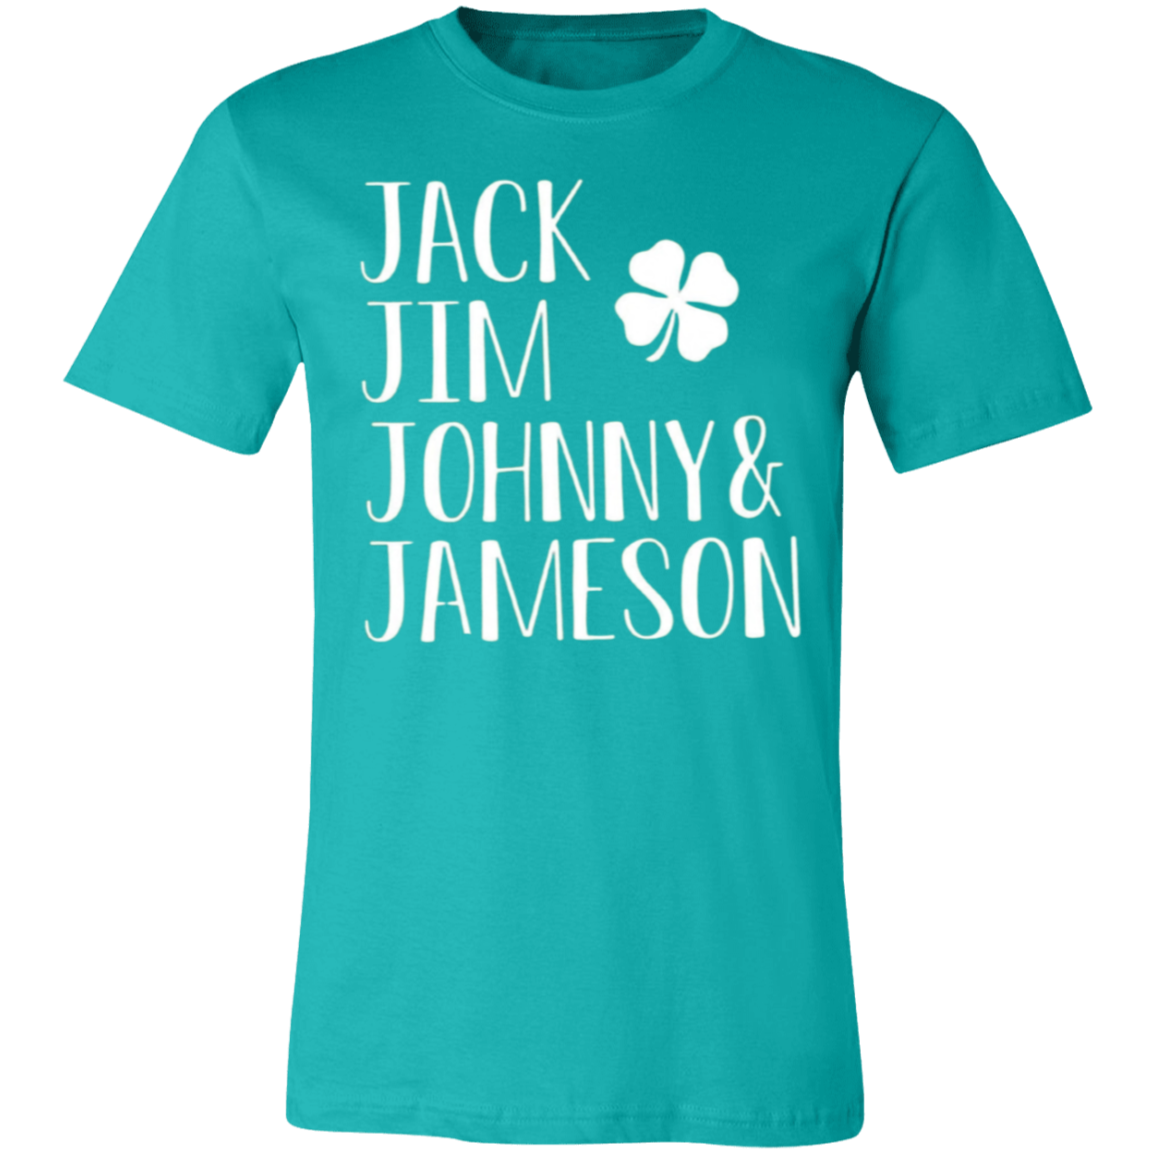 Jack Jim Johnny & Jameson Tee